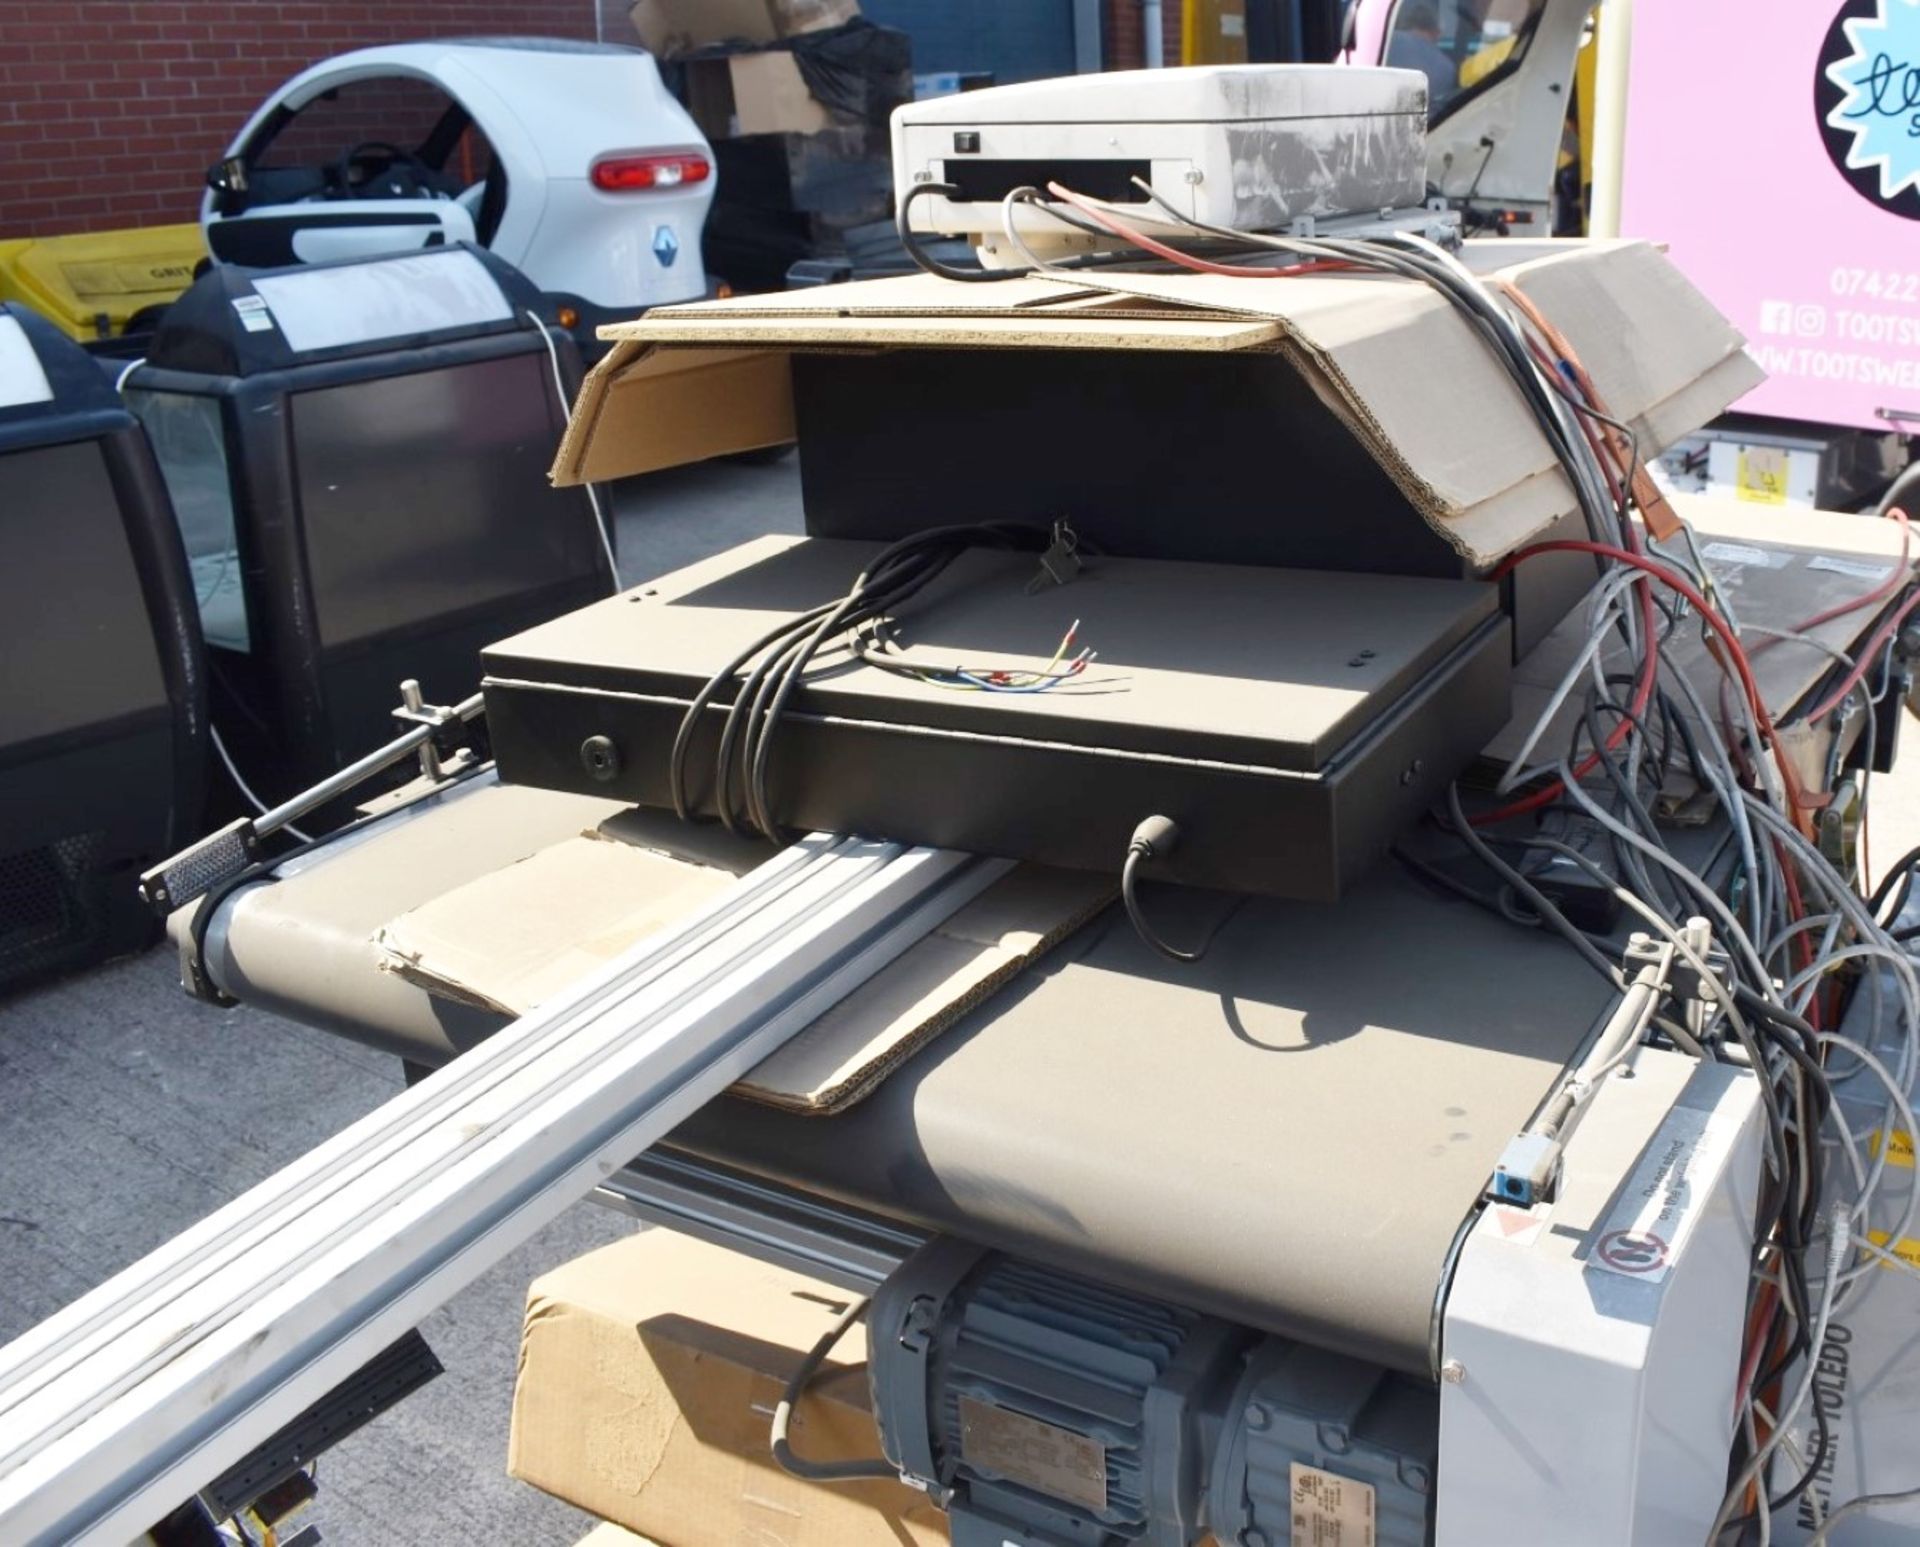 3 x Zebra ID 252 Label Printers, Mettler Toledo CSN950 Dimensioner & ICS469 Weighing Terminal & More - Image 46 of 53